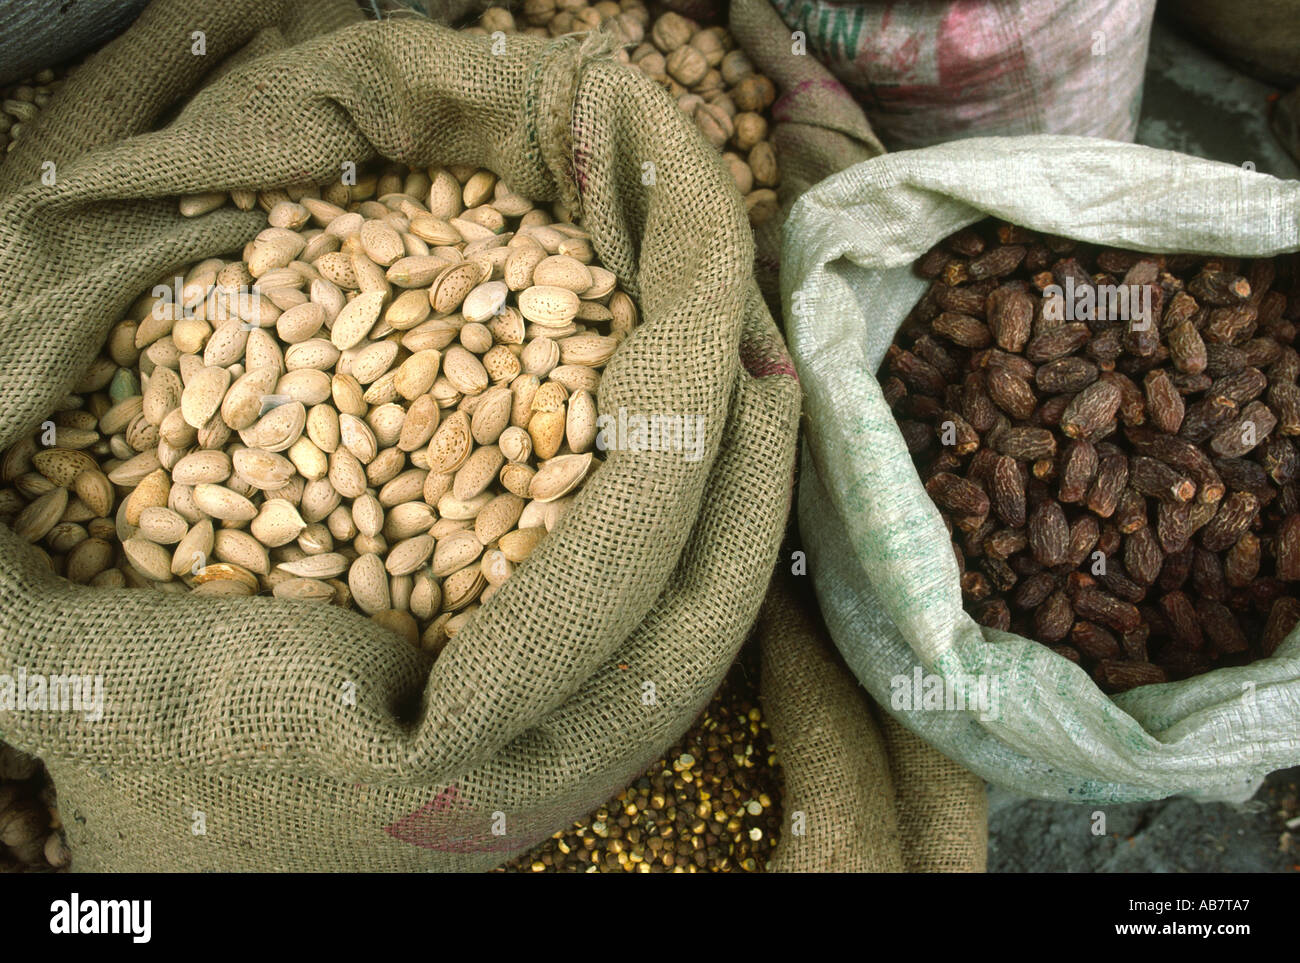 Pakistan Baluchistan Quetta bags of nuts Stock Photo